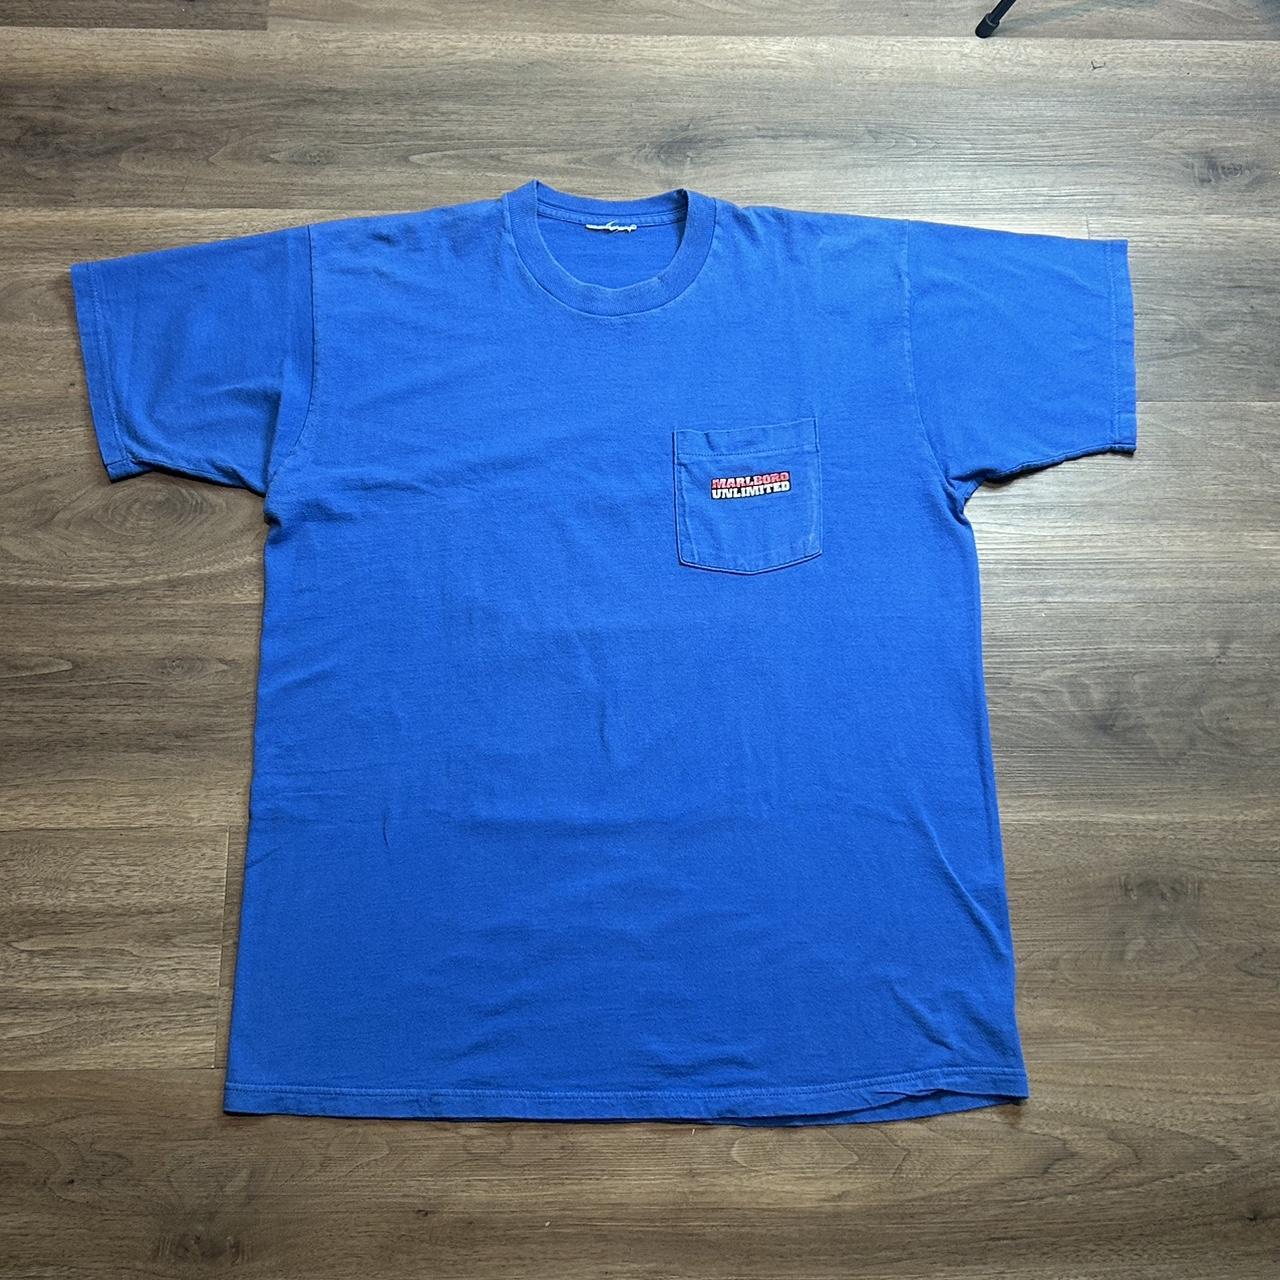 Marlboro Men's Blue T-shirt | Depop